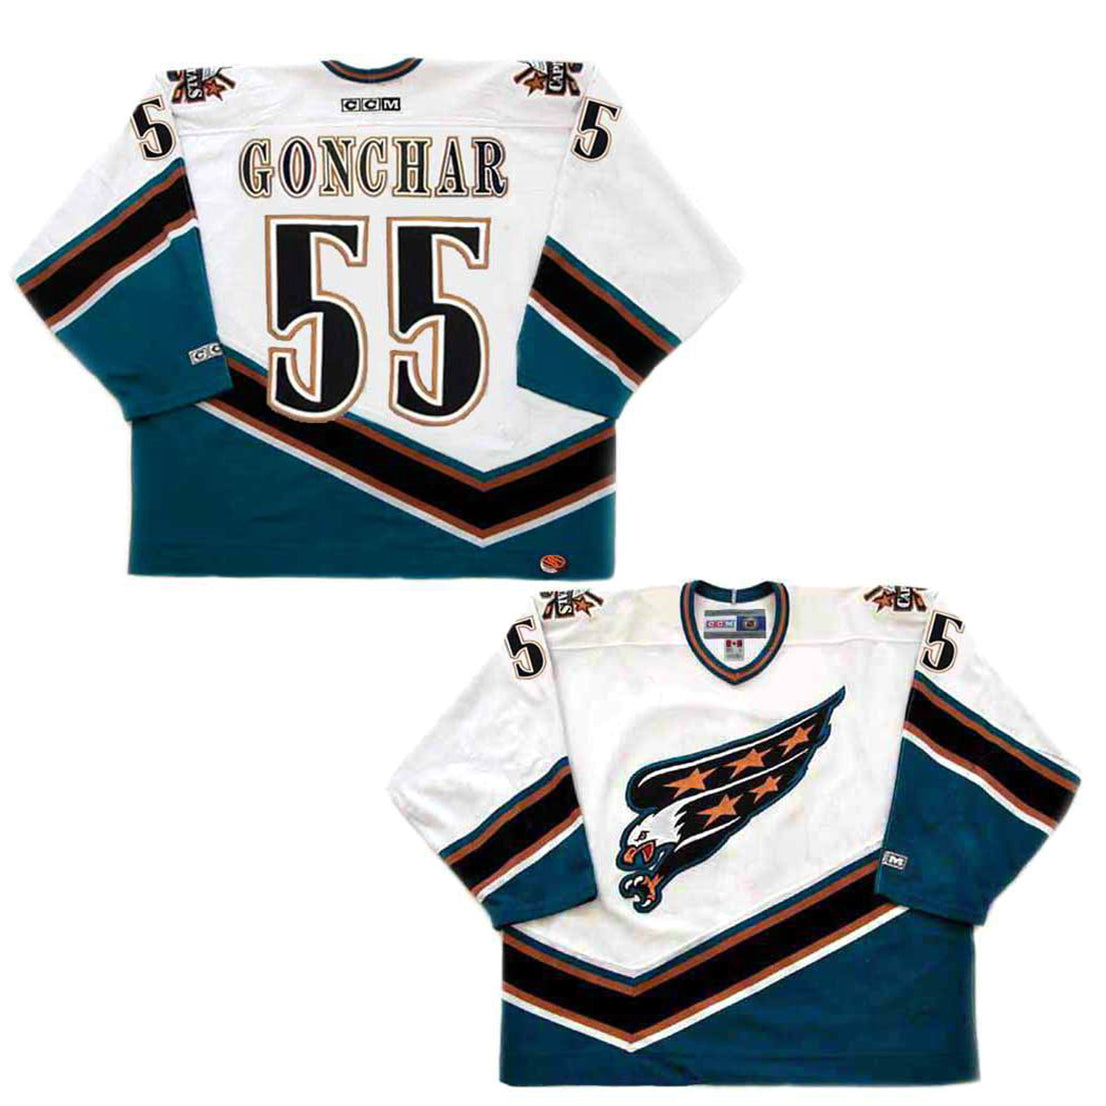 NHL Sergei Gonchar Washington Capitals 55 Jersey